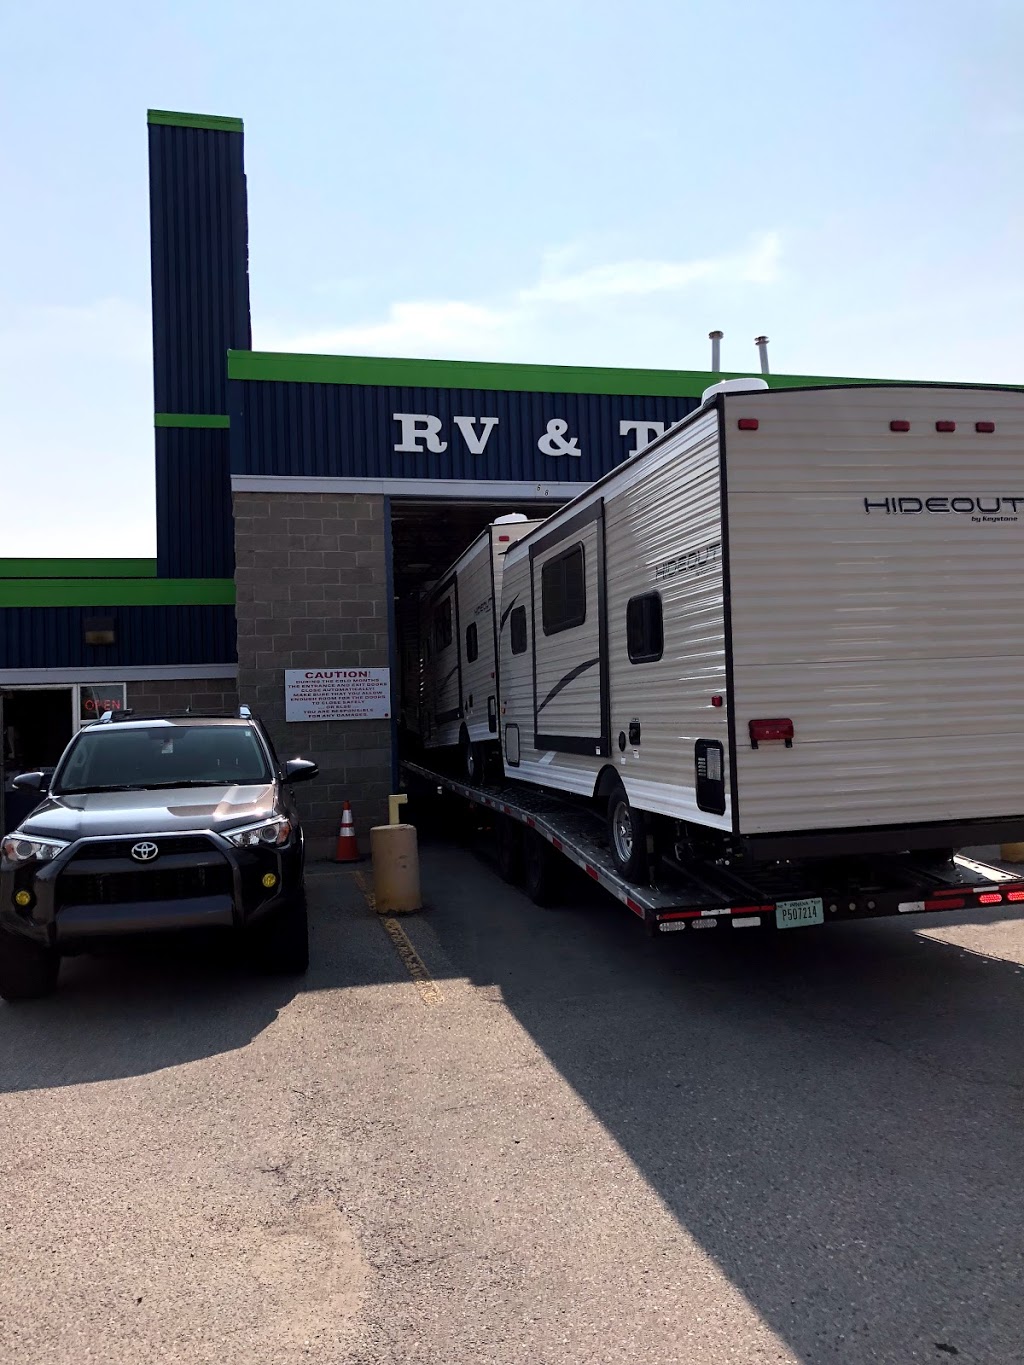 Bowfort Road RV, Truck & Car Wash. Off Road Vehicles Welcome! | 83 Bowridge Dr NW, Calgary, AB T3B 3R6, Canada | Phone: (403) 247-3597